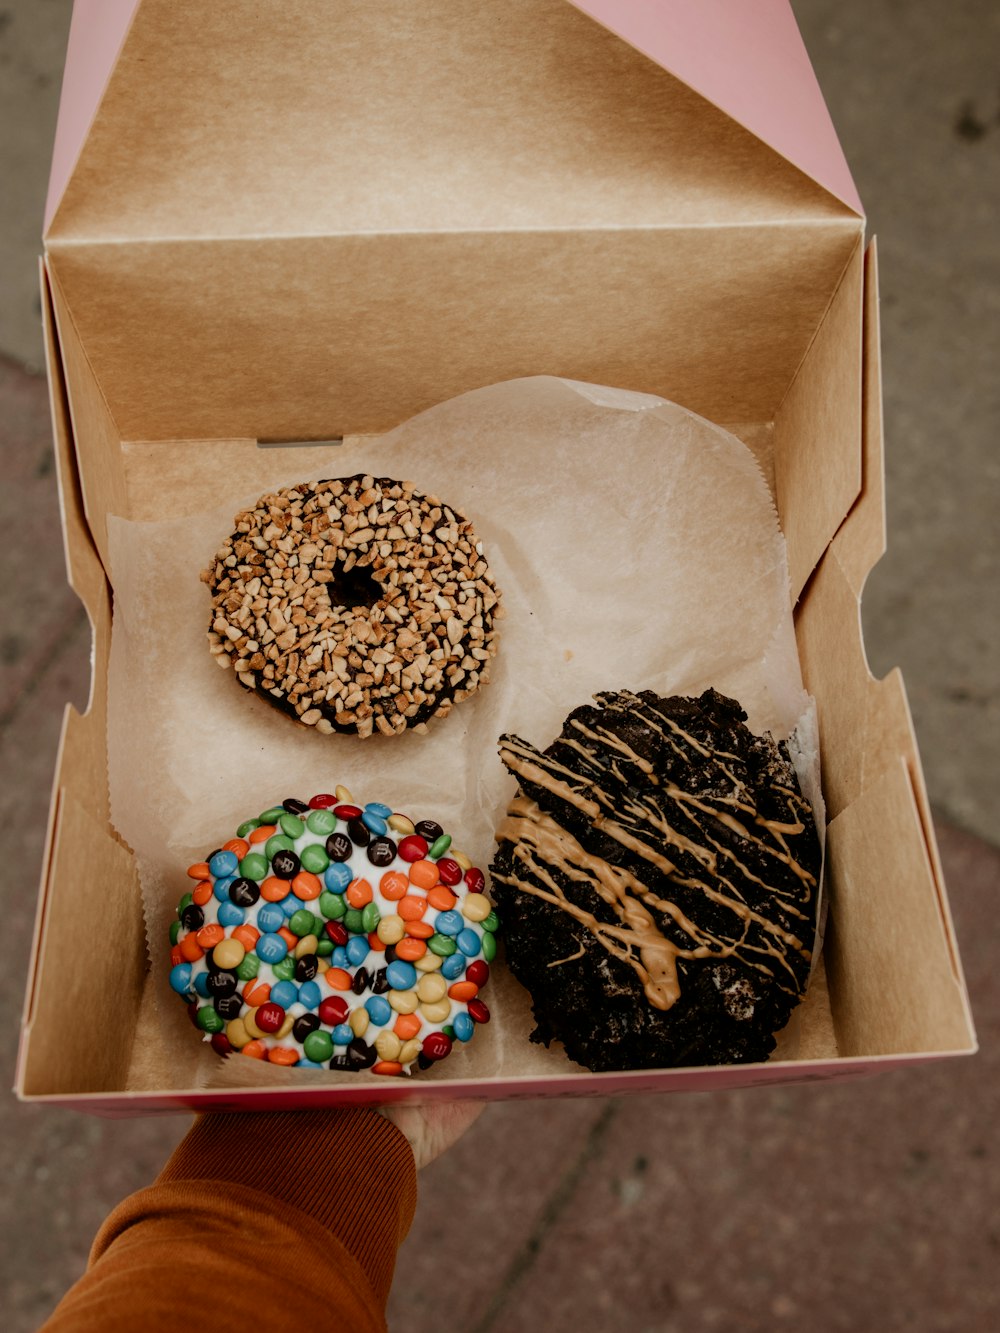 white and black doughnut on brown cardboard box